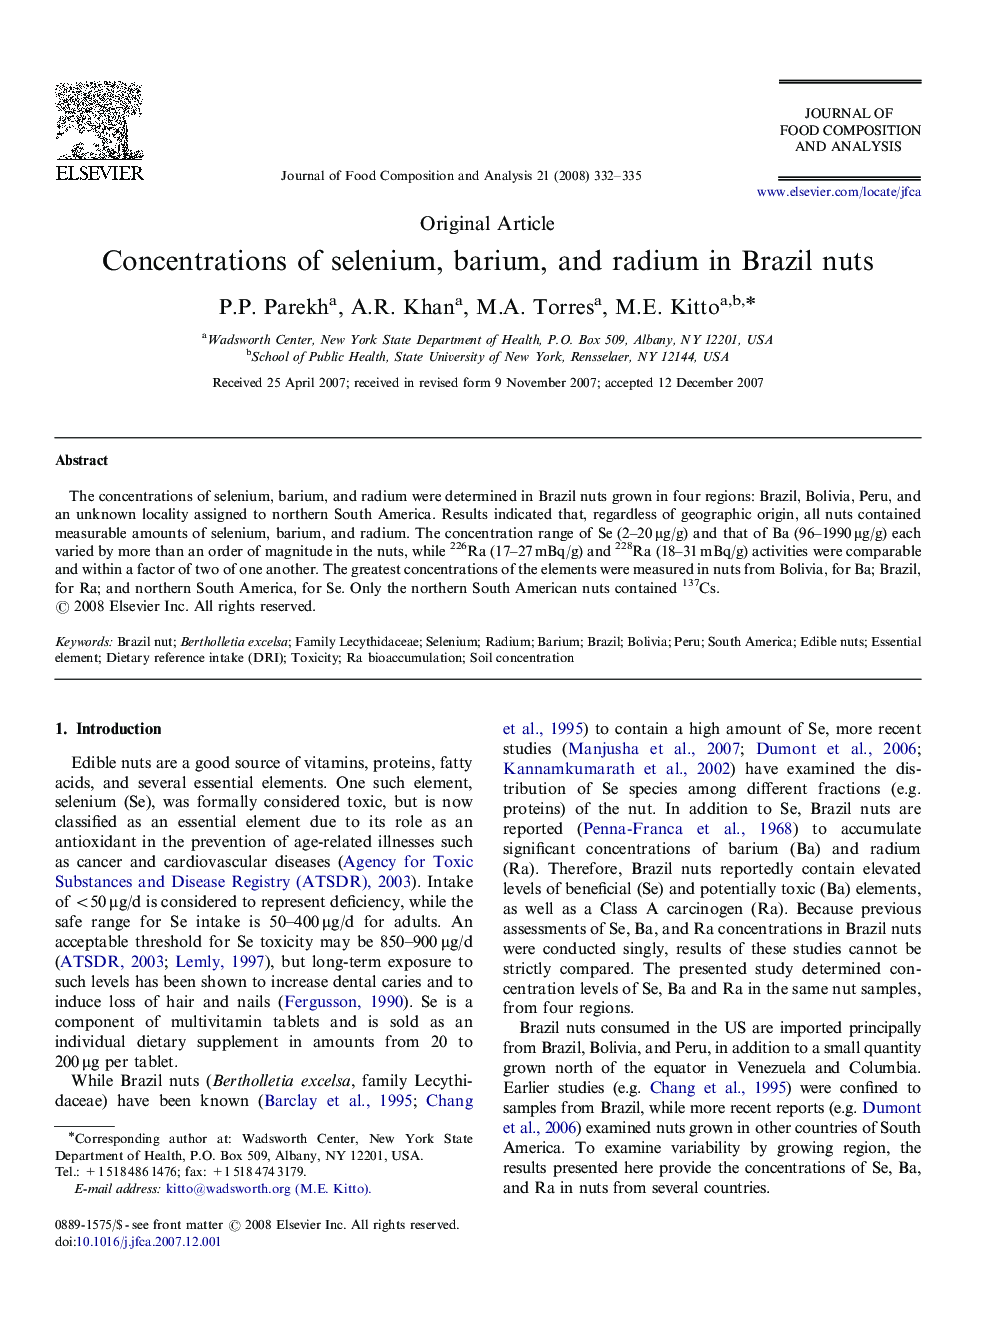 Concentrations of selenium, barium, and radium in Brazil nuts